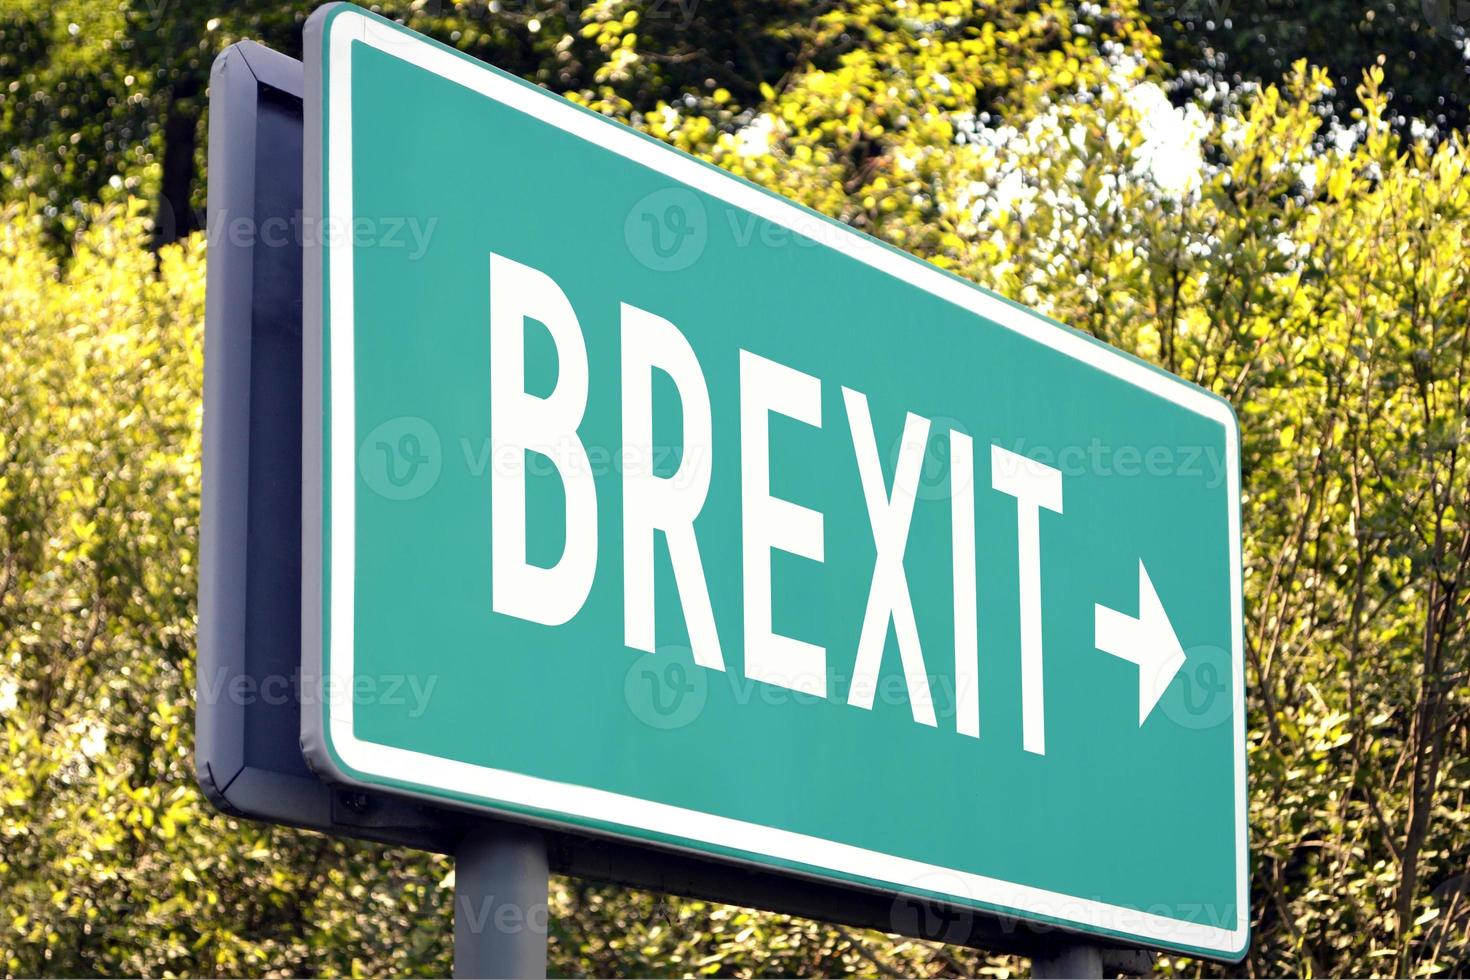 Brexit - Next Exit Road Sign photo